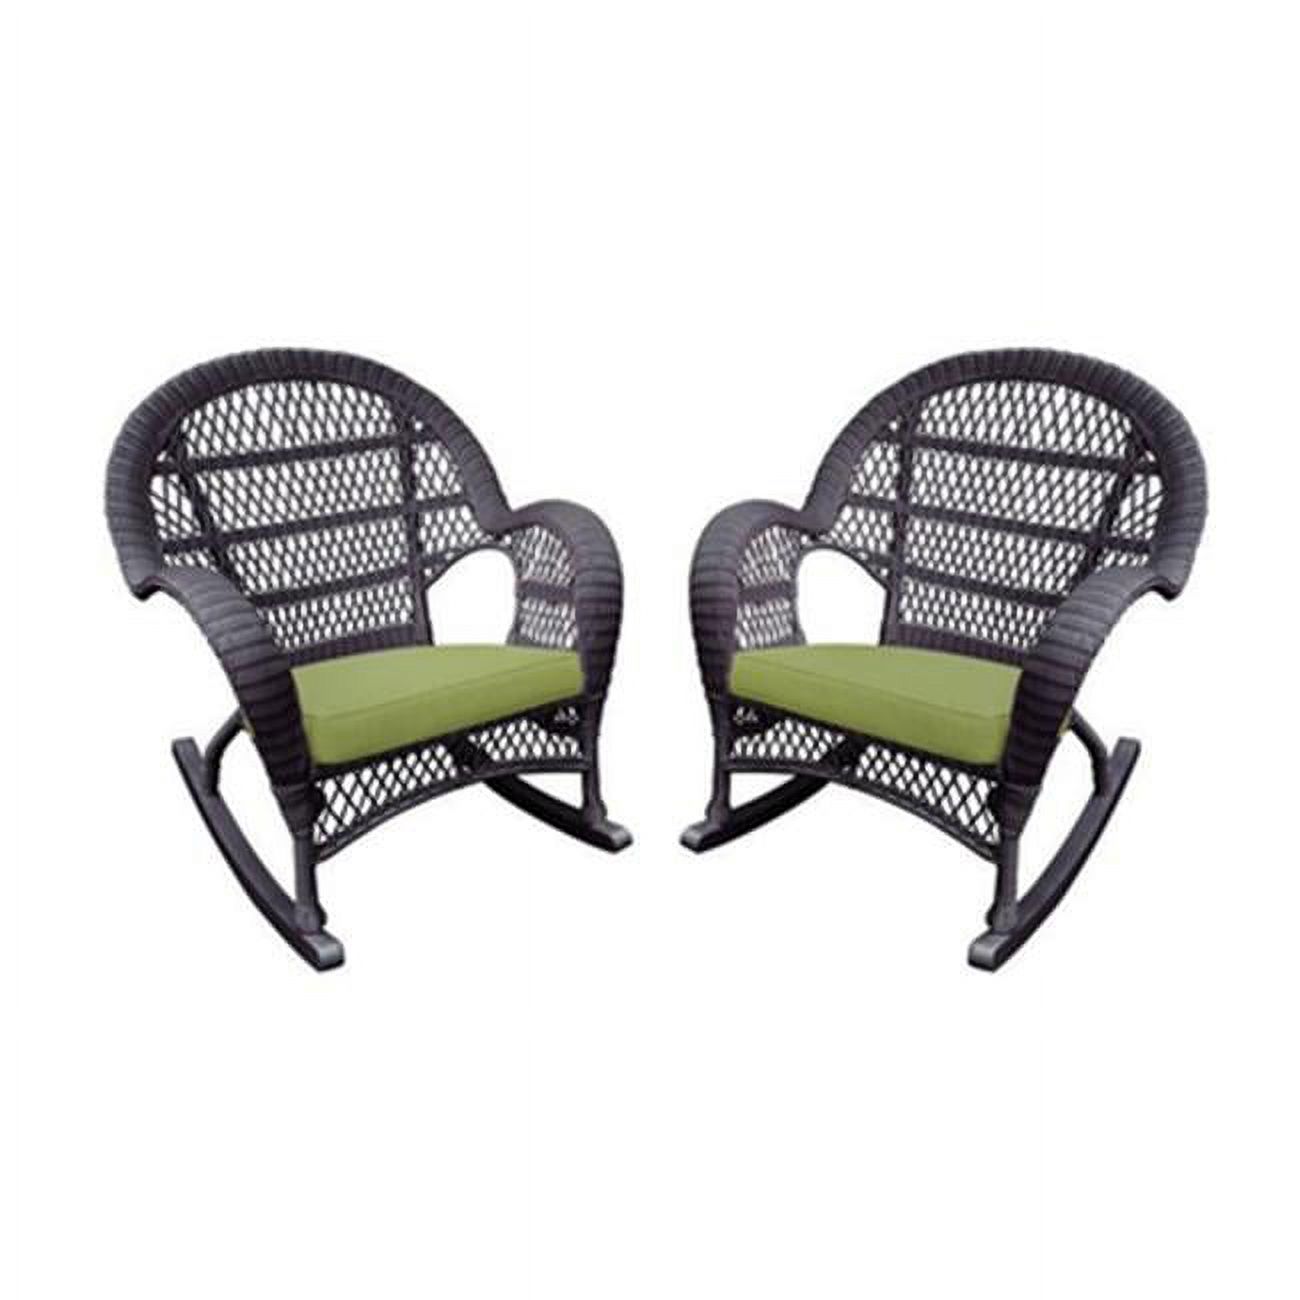 W00208-R-4-FS029-CS Espresso Wicker Rocker Chair with Green Cushion - Set of 4 - image 1 of 1